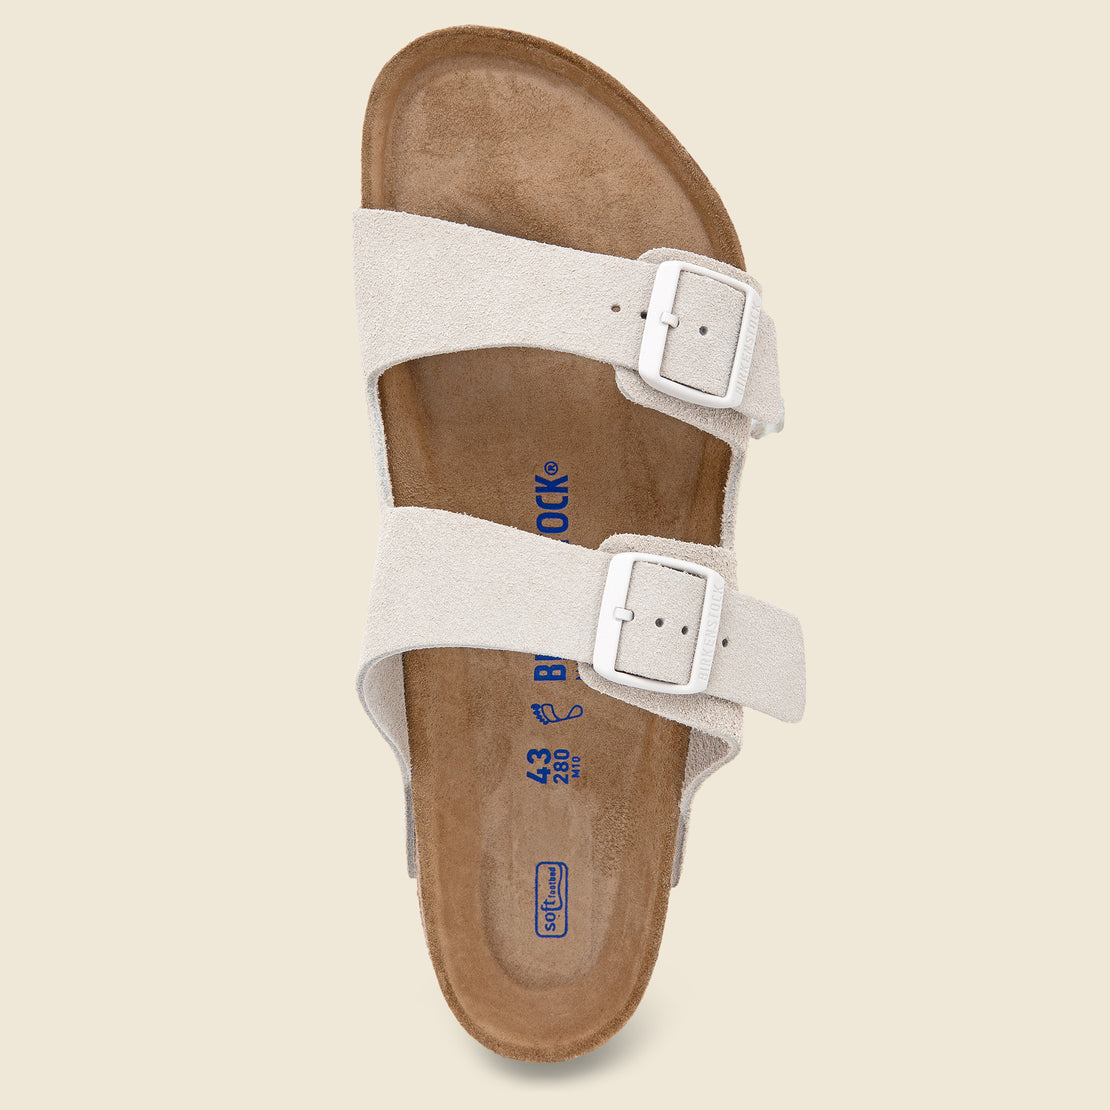 Arizona Suede Sandal - Antique White/Suede - Birkenstock - STAG Provisions - Shoes - Sandals / Flops